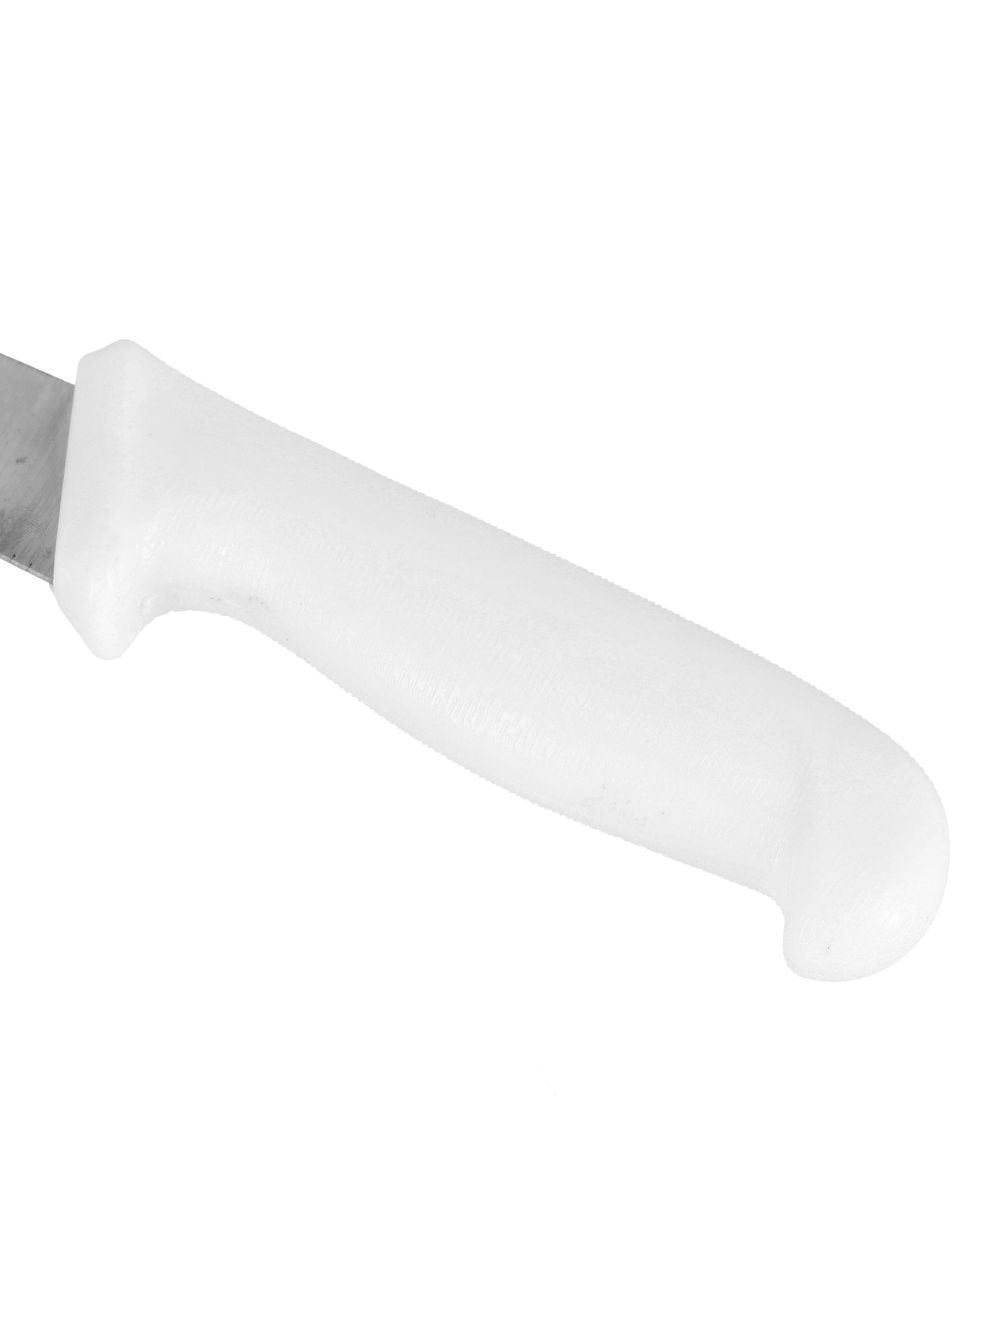 Royalford Slicer Knife